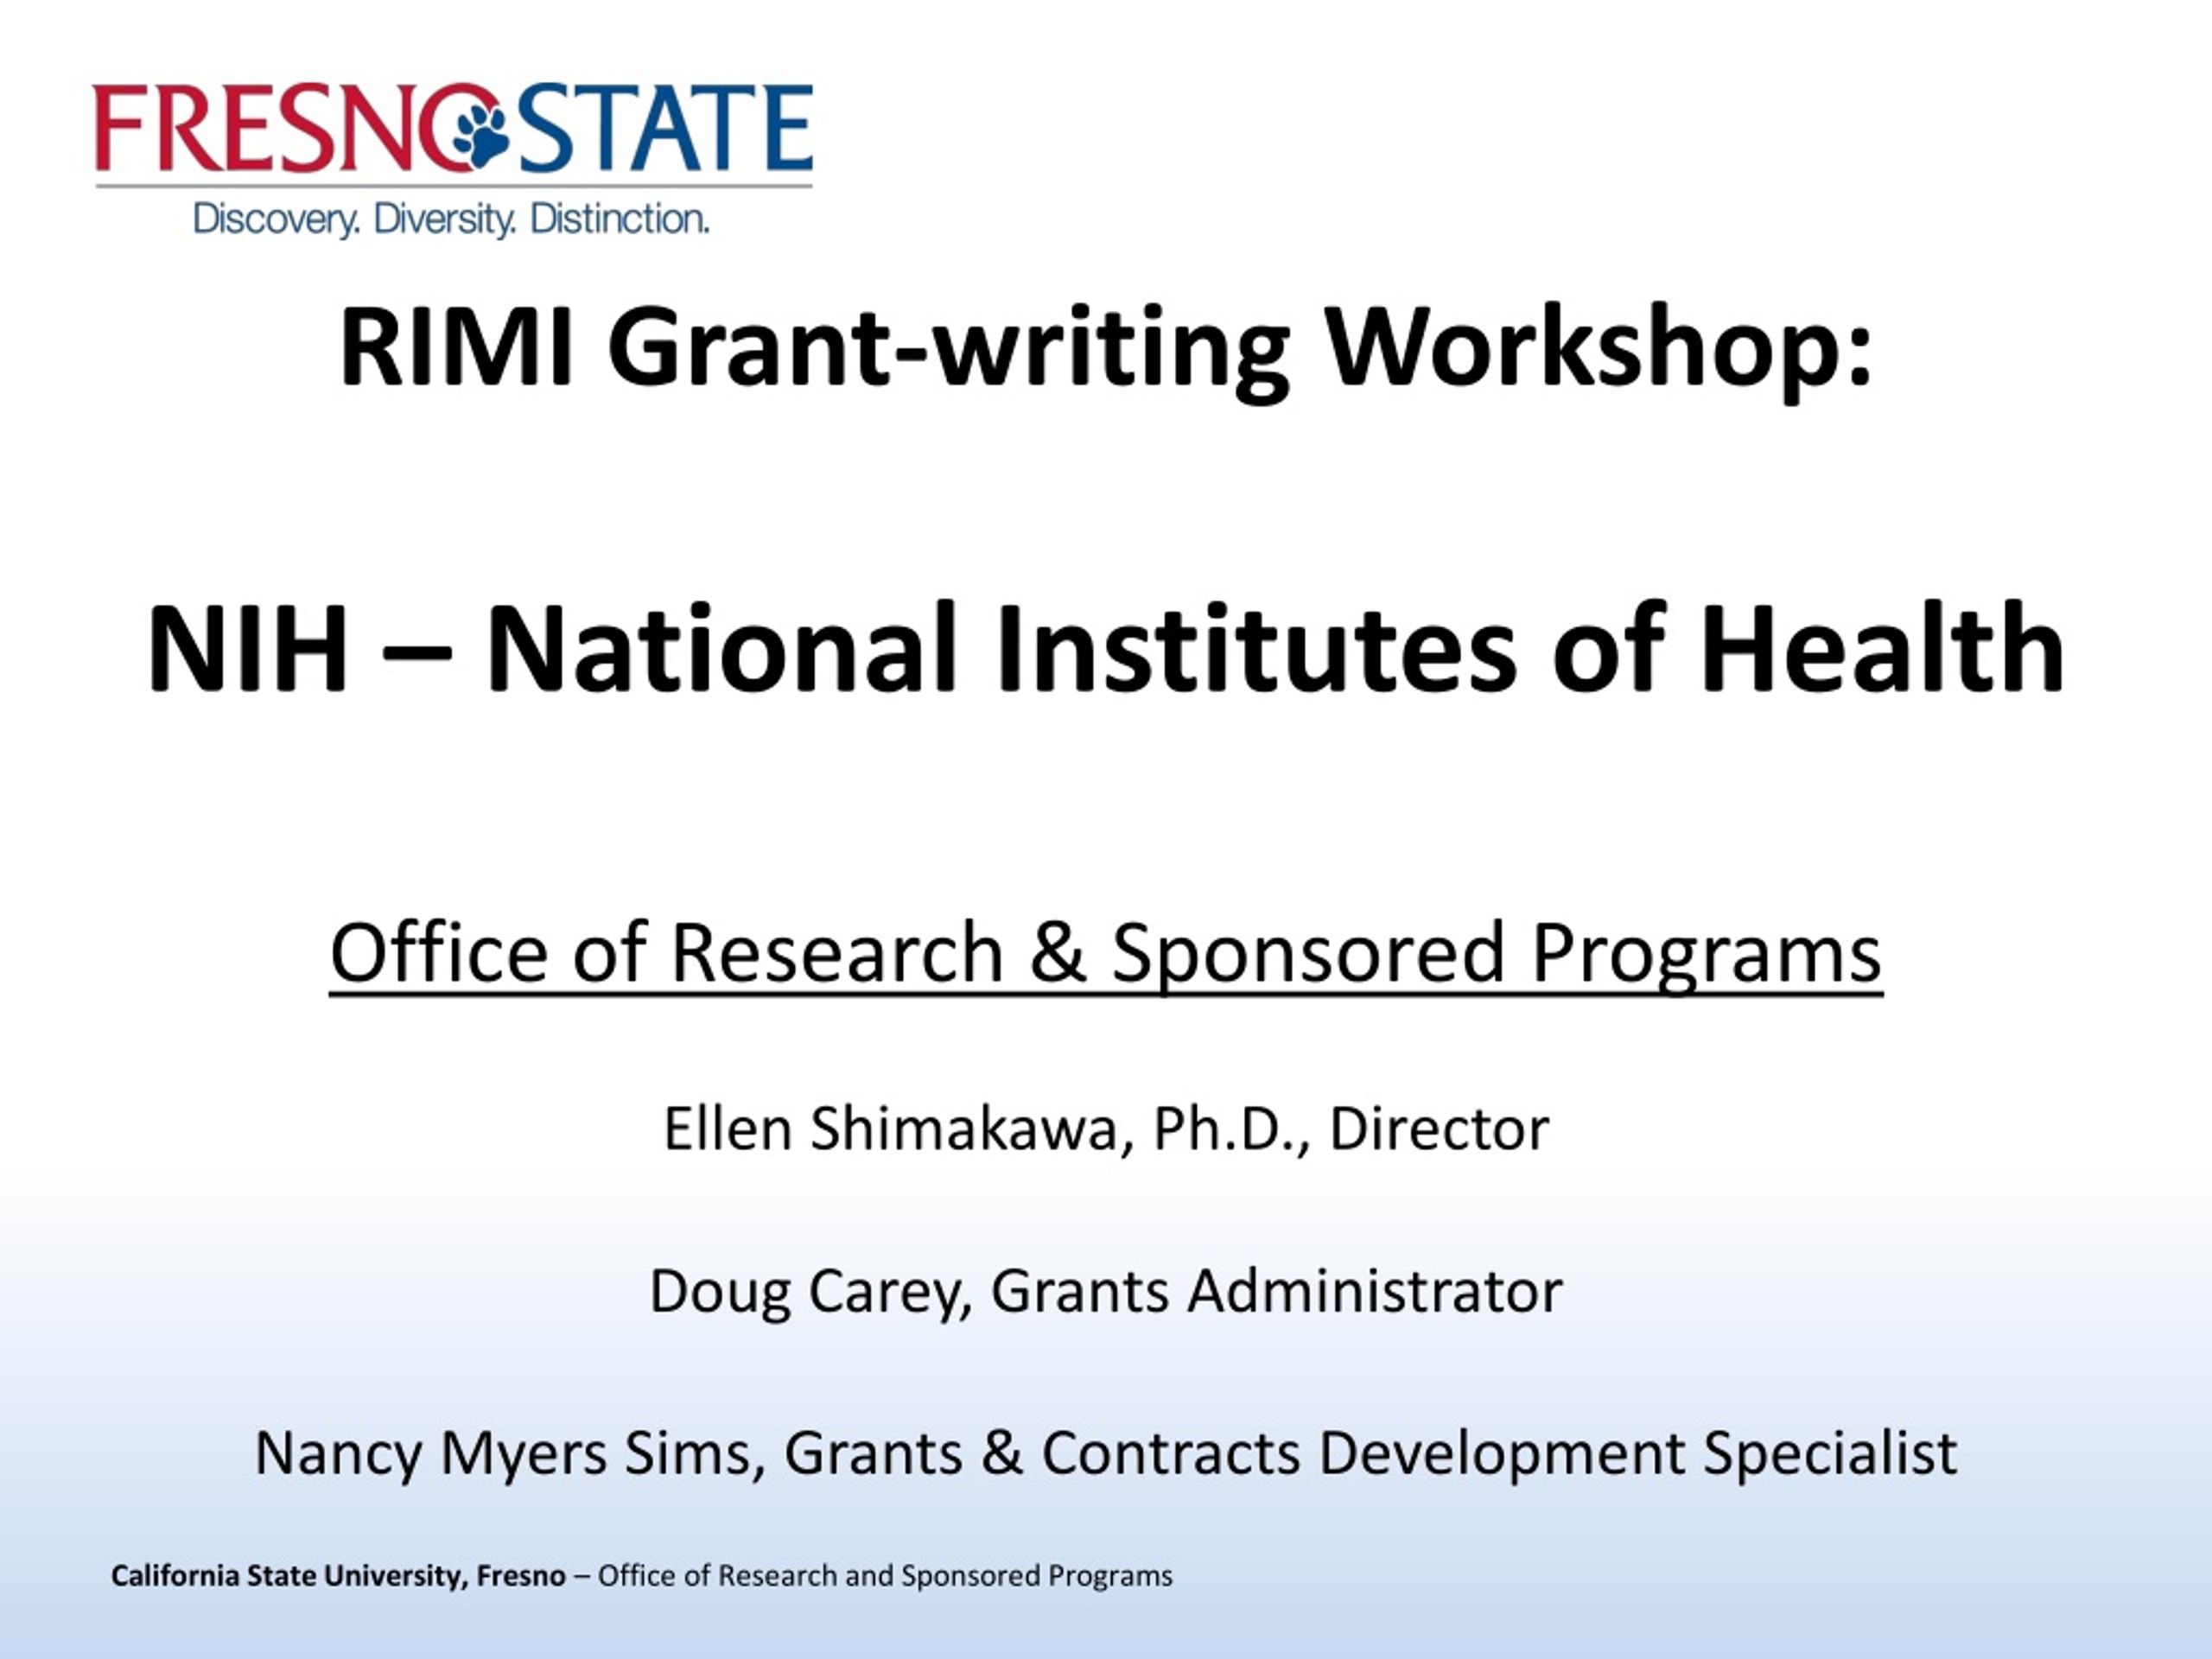 PPT RIMI Grantwriting NIH National Institutes of Health